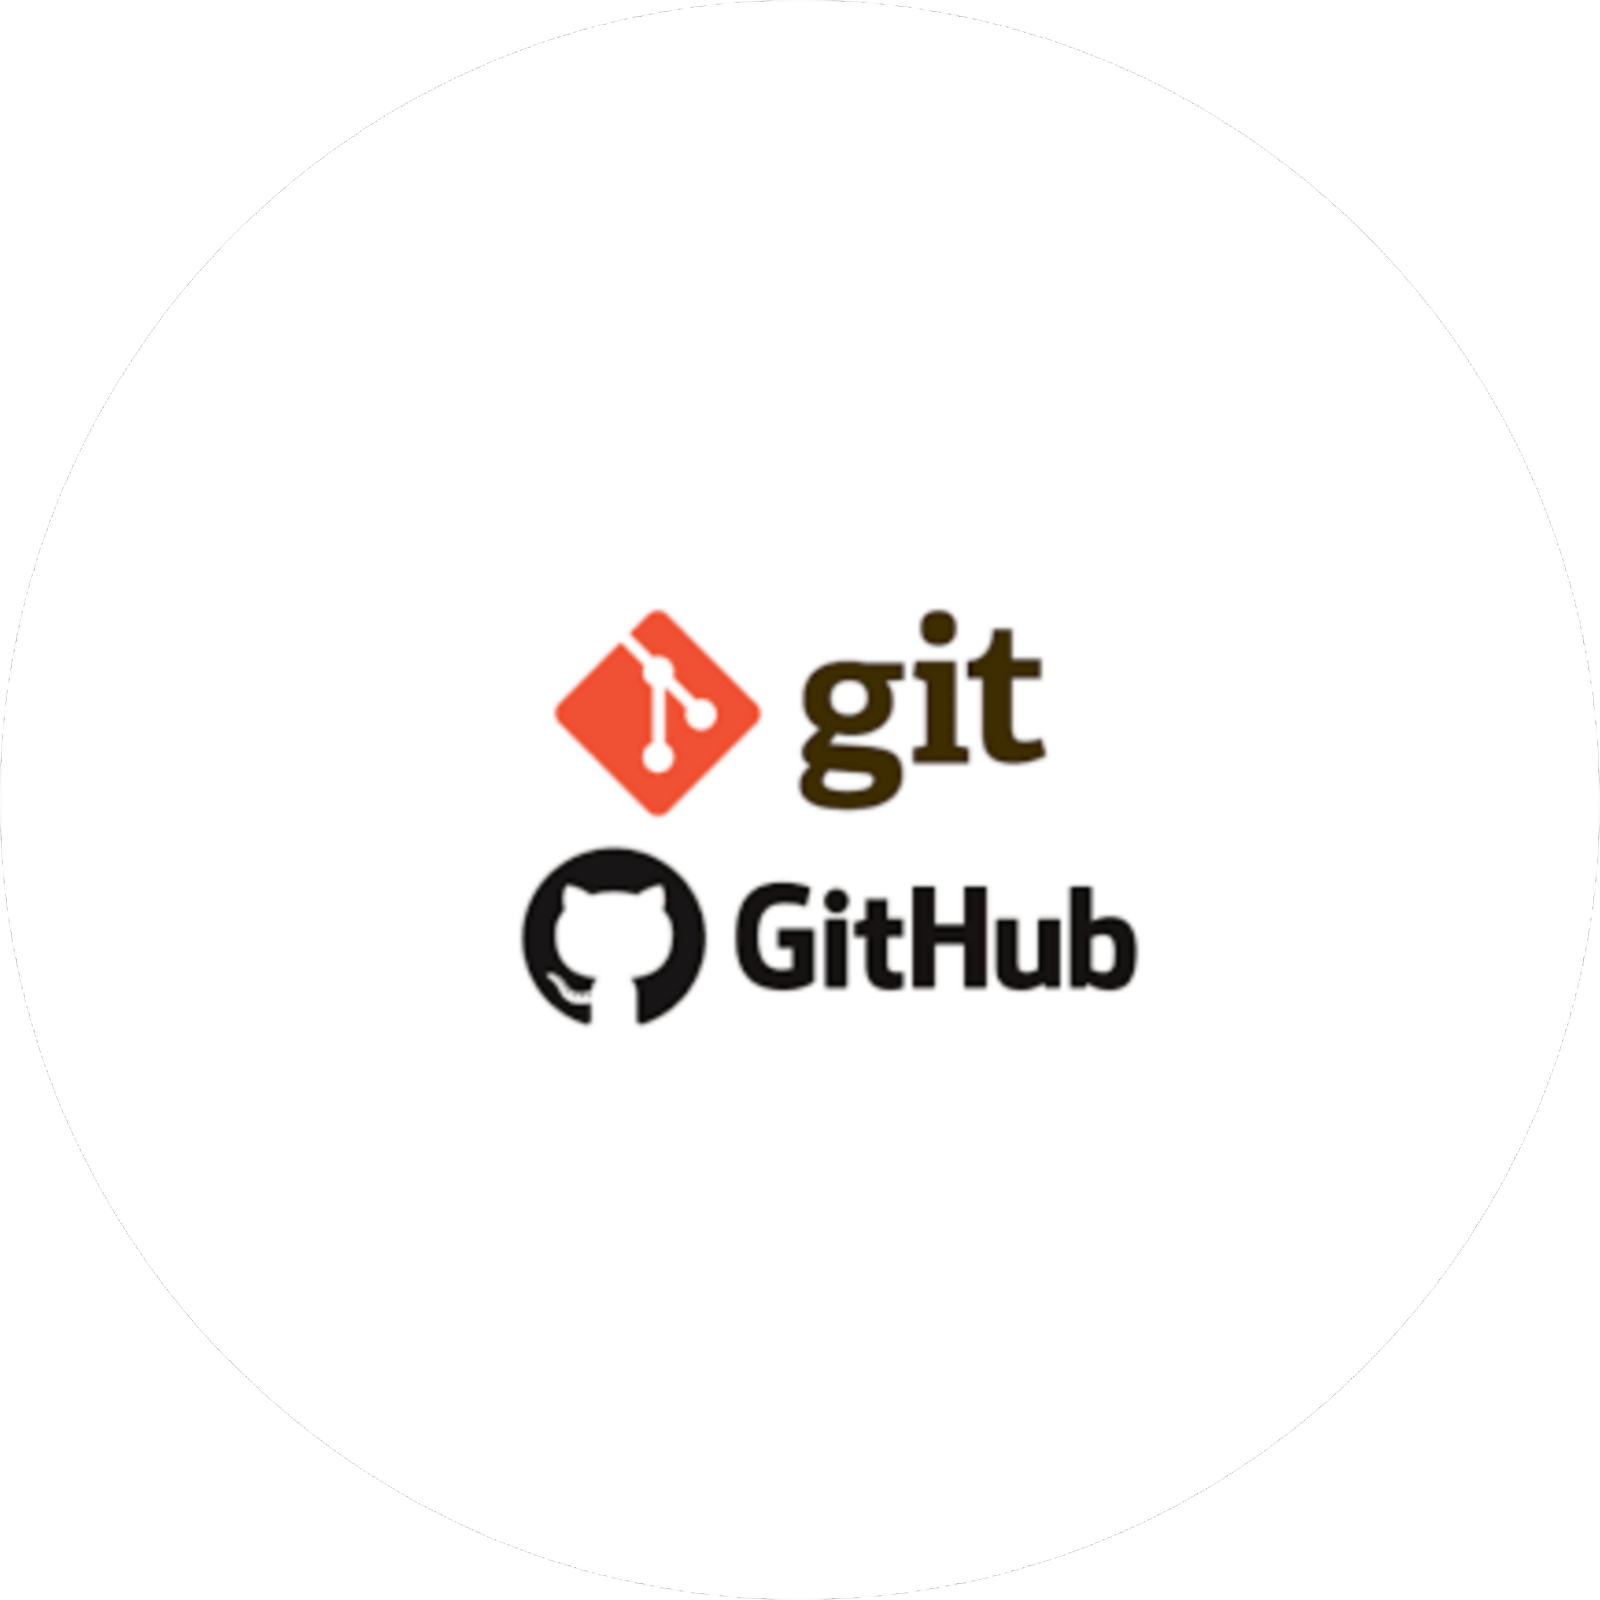 Git & Git hub